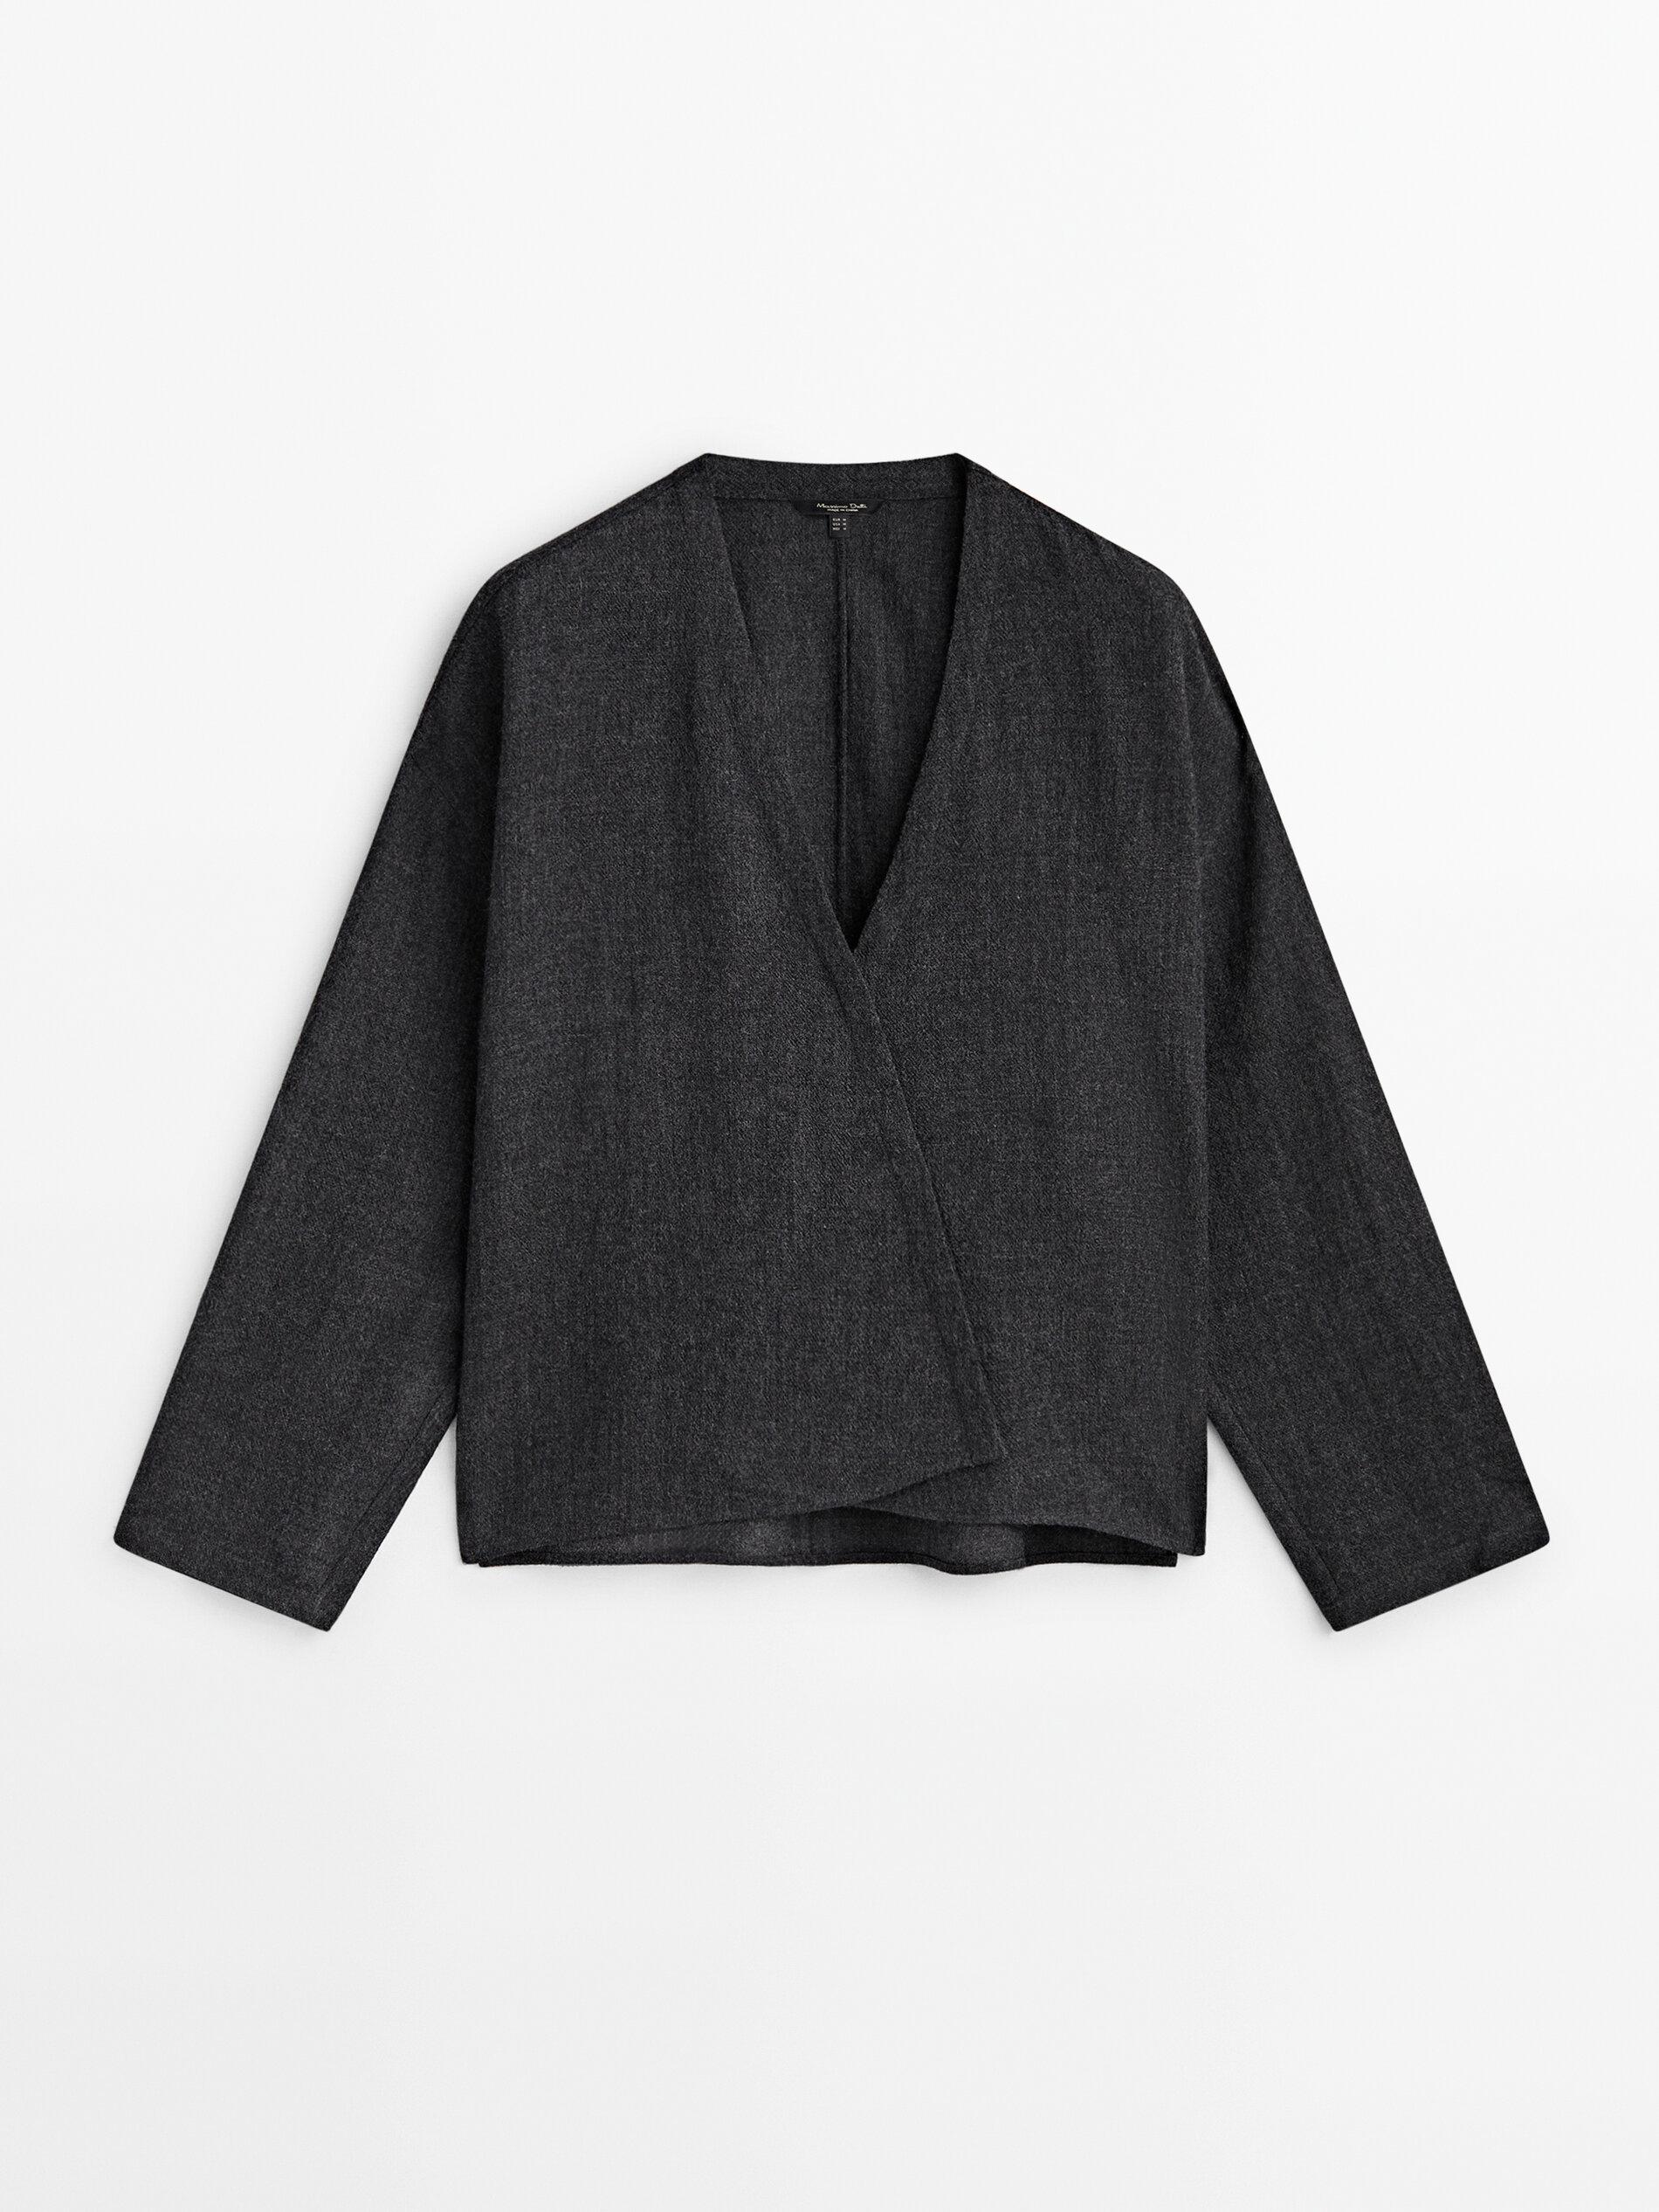 MASSIMO DUTTI Wool Blend Kimono Blouse in Black | Lyst